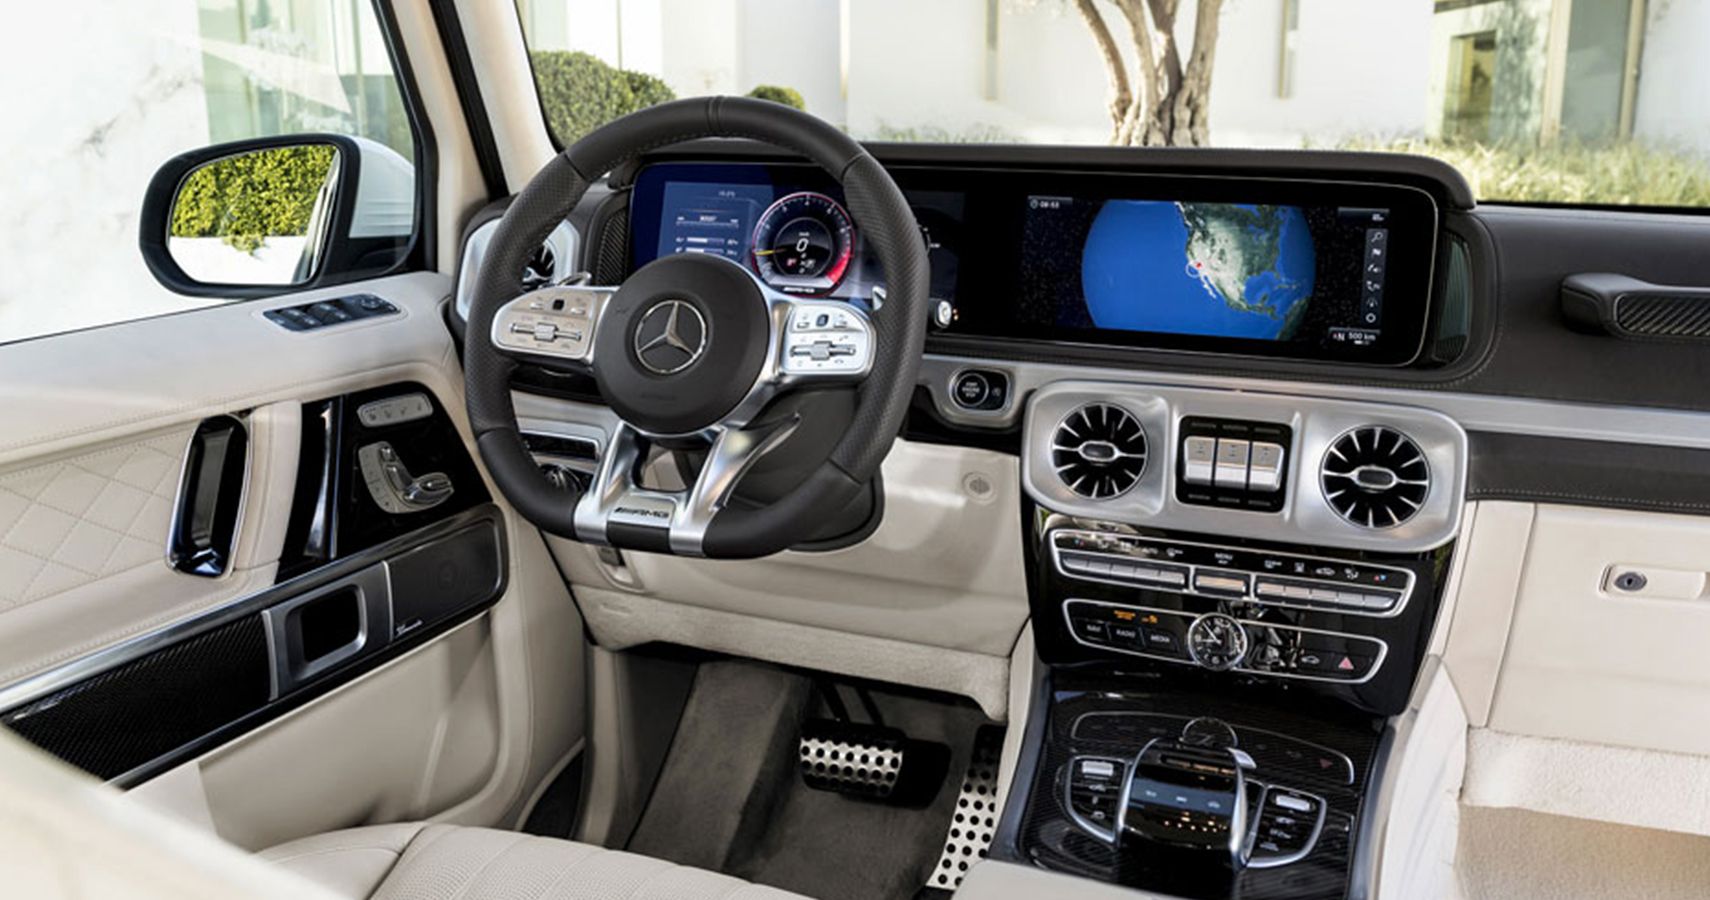 Mercedes-AMG G63 Interior